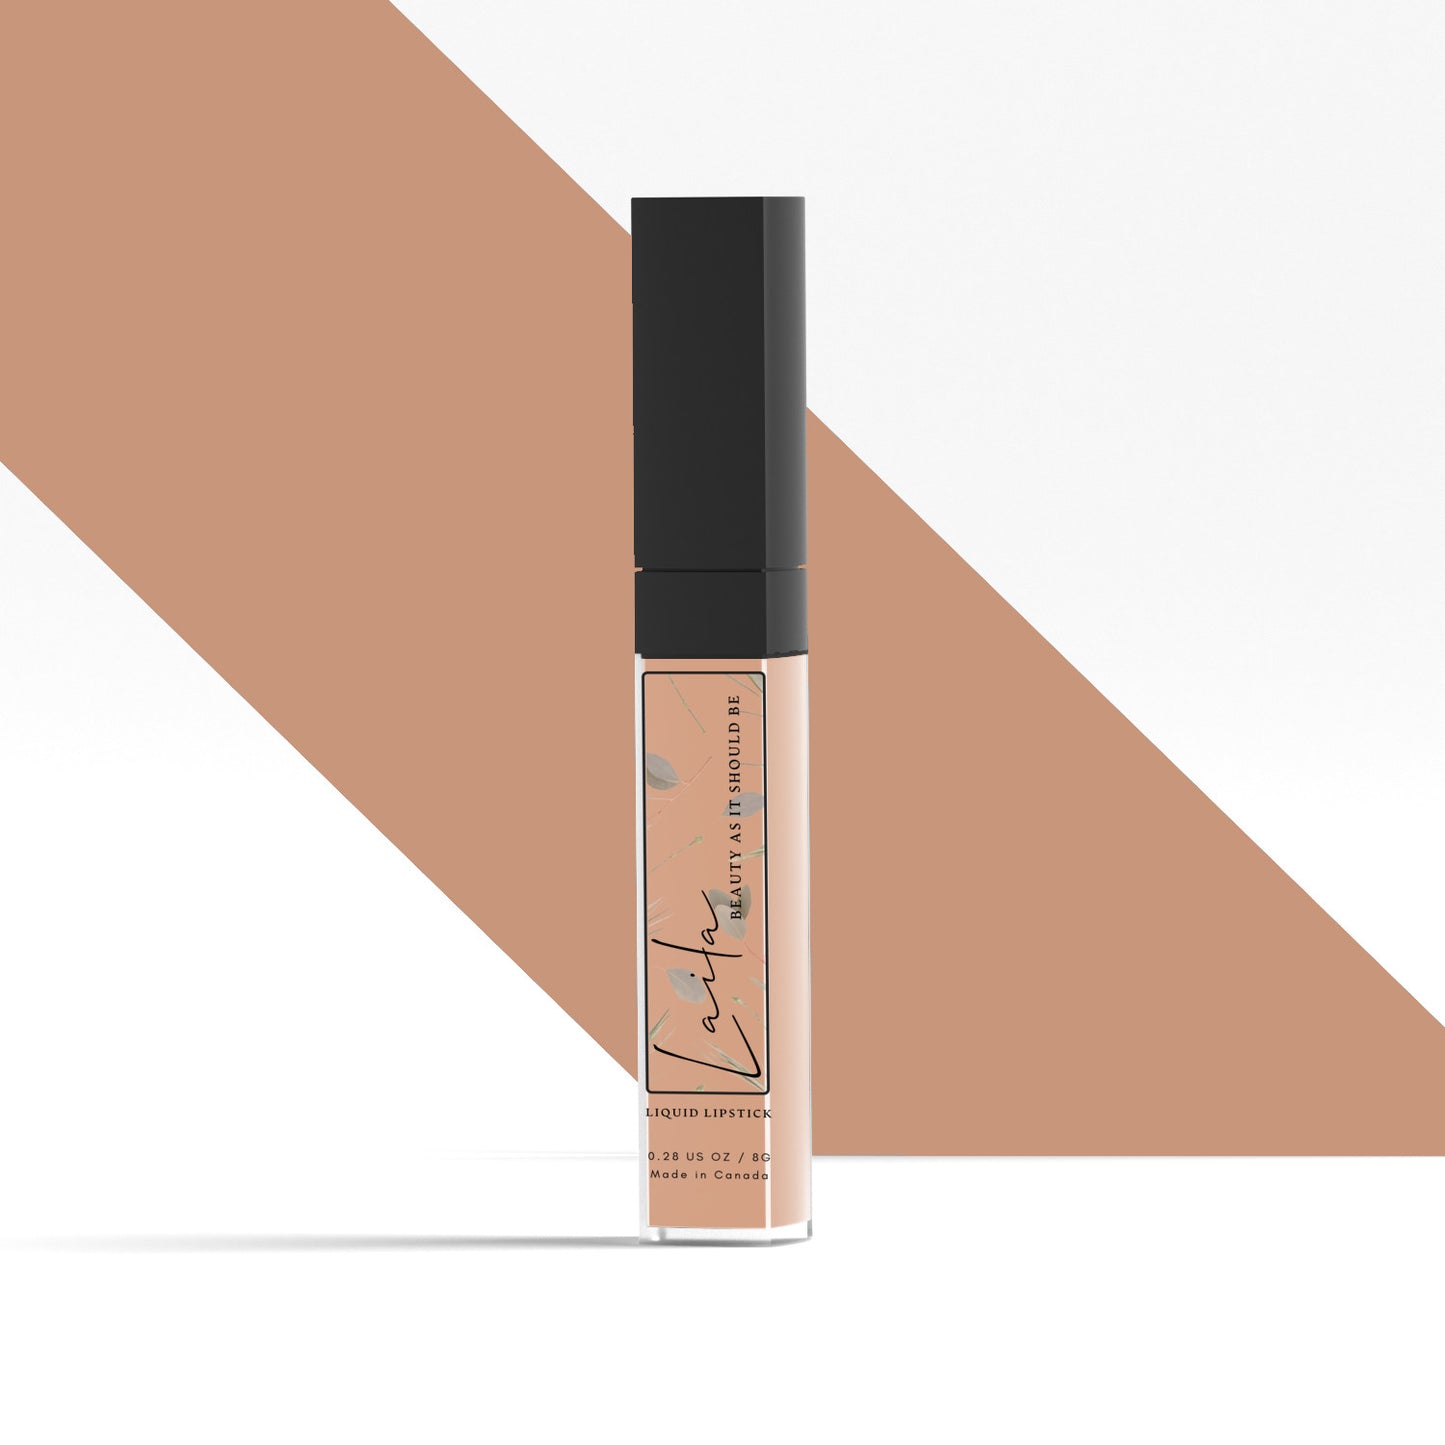 All Natural - Matte Liquid Lipstick Liquid Lipstick - Laila Beauty Care Liquid Lipstick